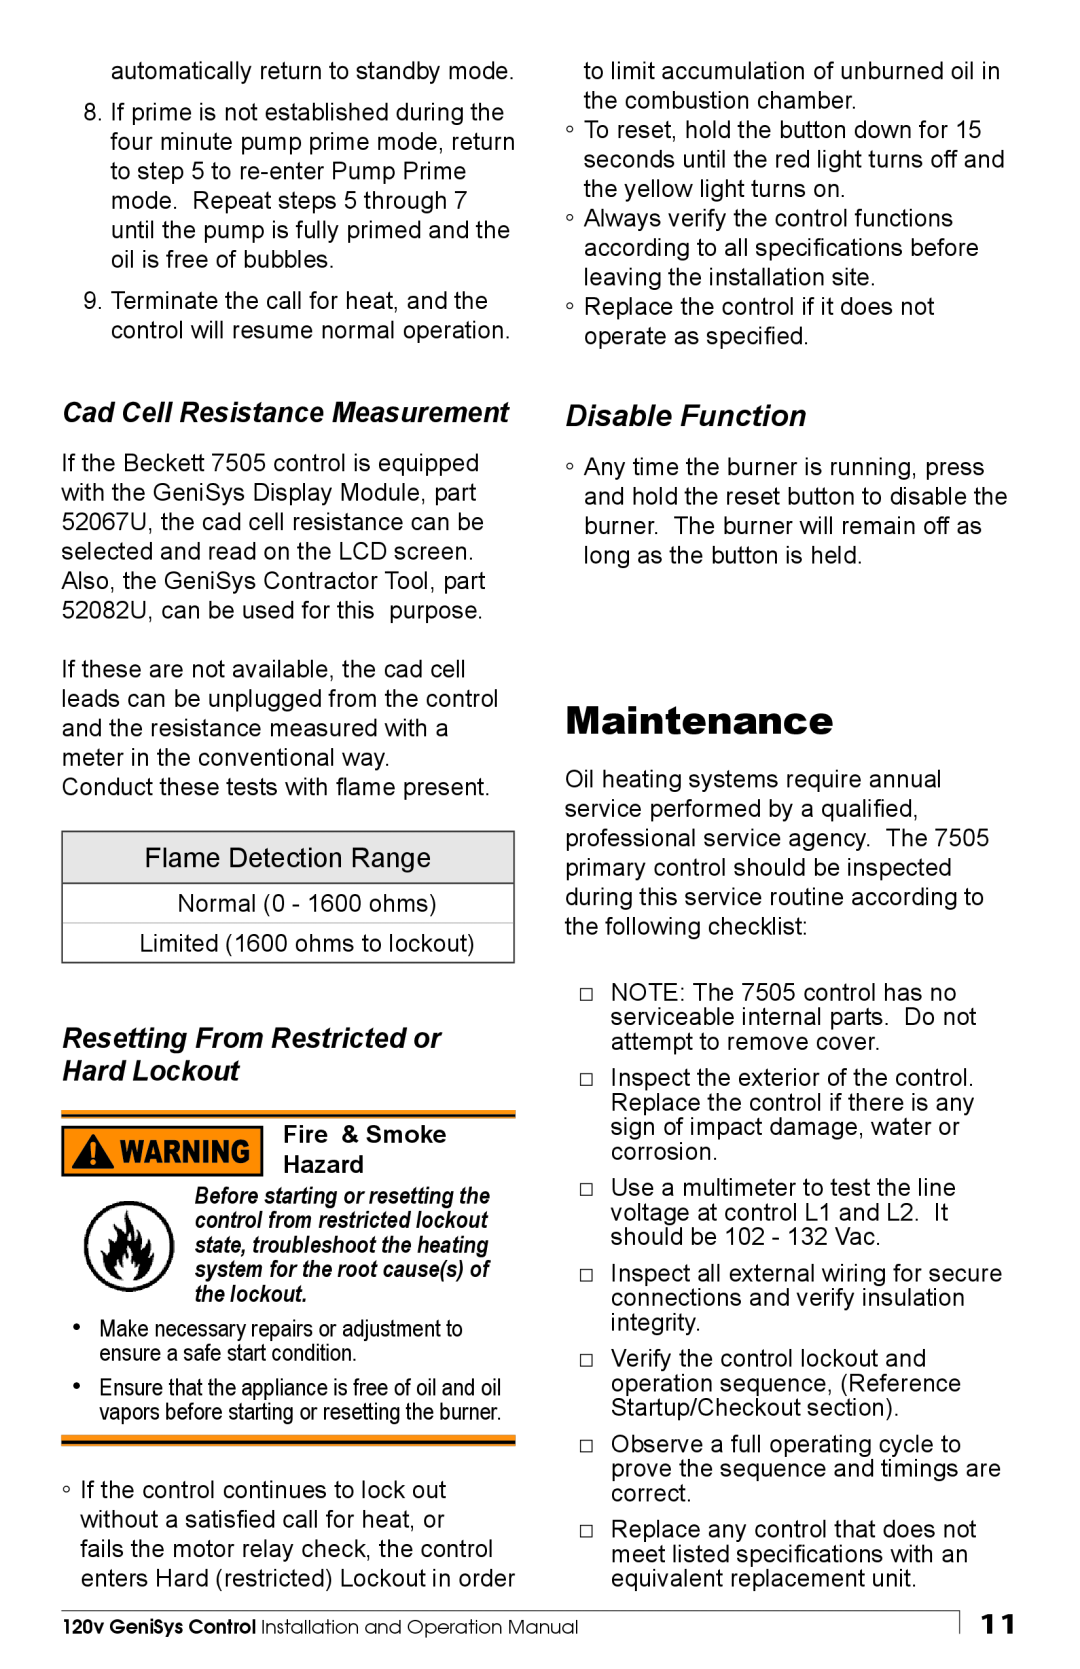 Beckett Model 7505 manual Maintenance, Disable Function, Flame Detection Range, Fire & Smoke Hazard 